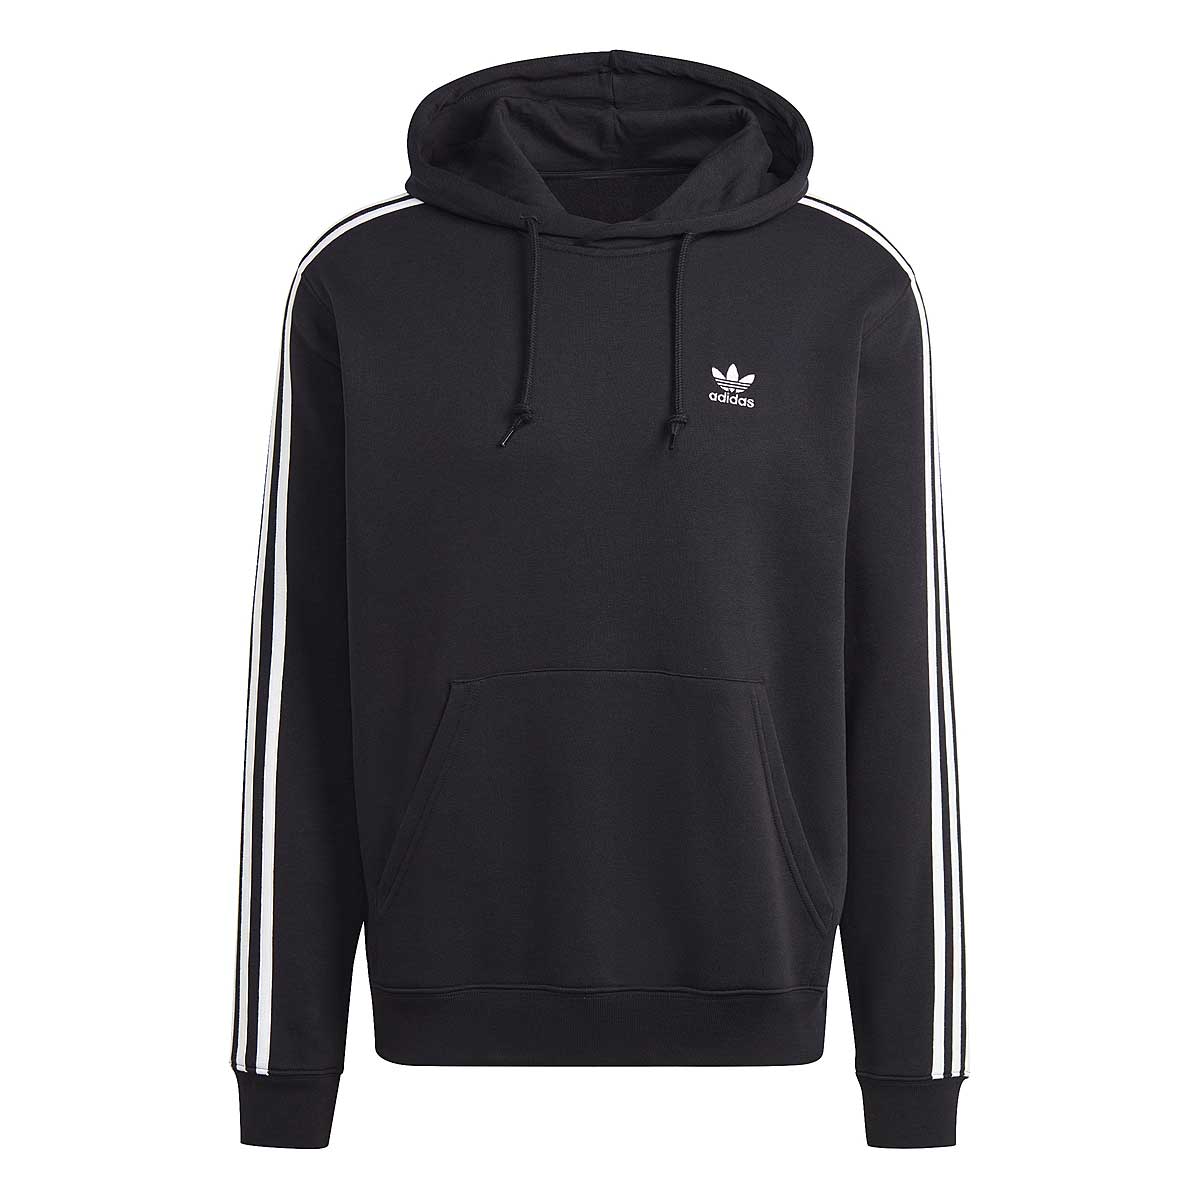 Image of Adidas 3-stripes Hoody, Black/black